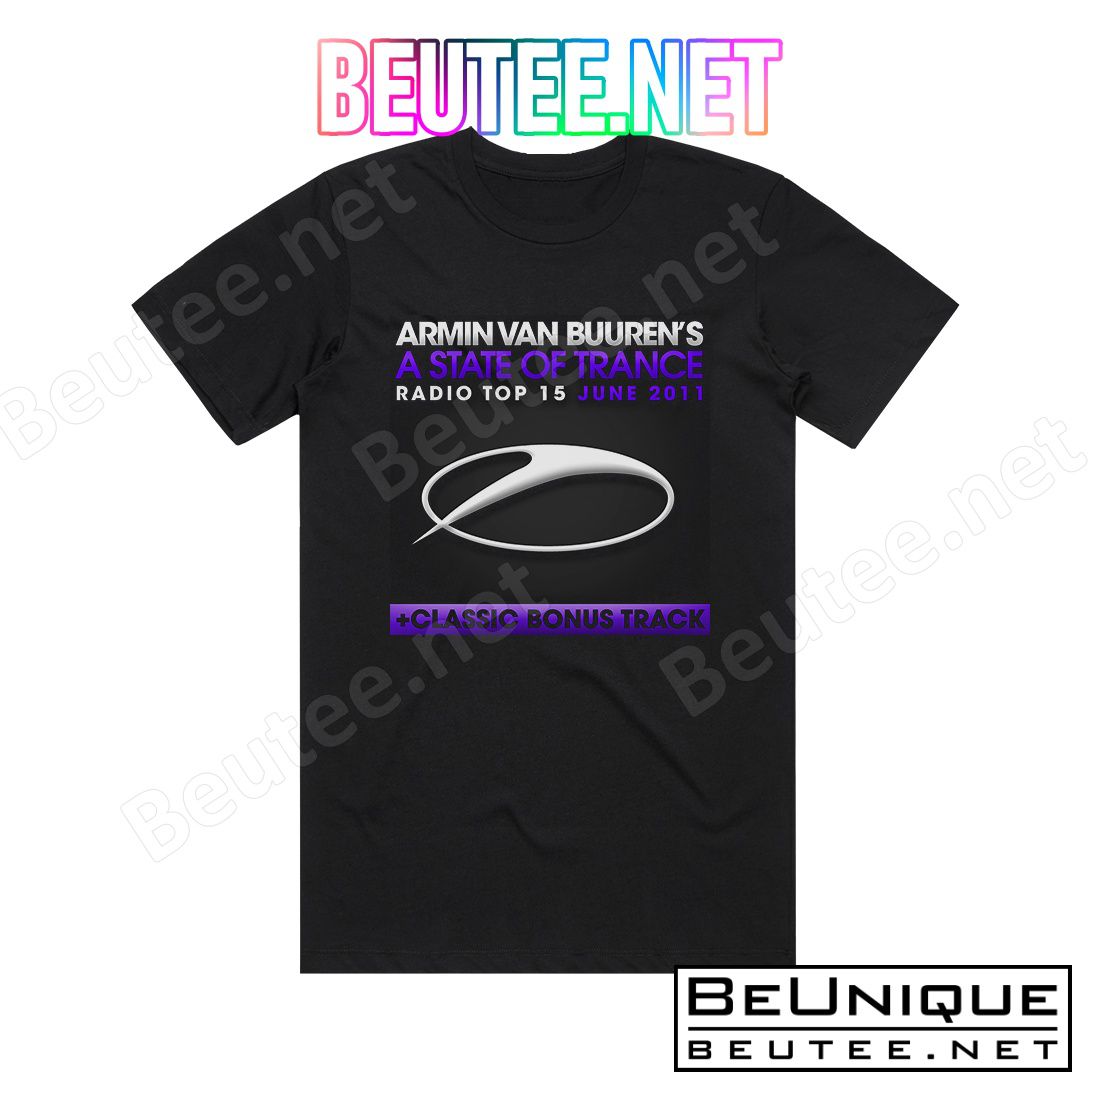 Armin van Buuren A State Of Trance Radio Top 15 June 2011 Album Cover T-Shirt